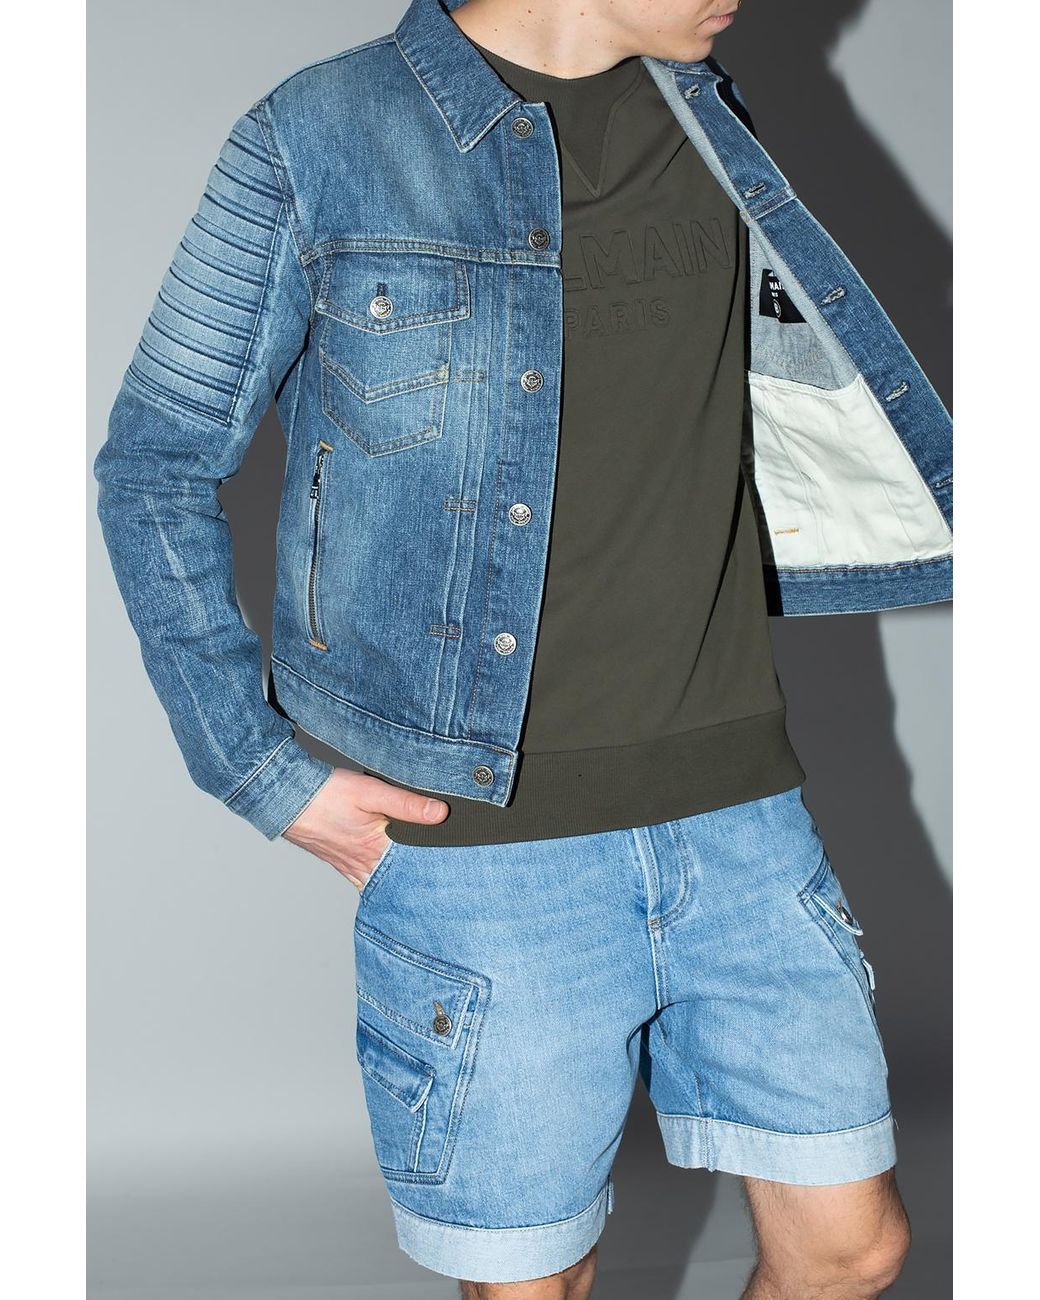 Balmain Denim Jacket With Logo in Blue for Men - Lyst